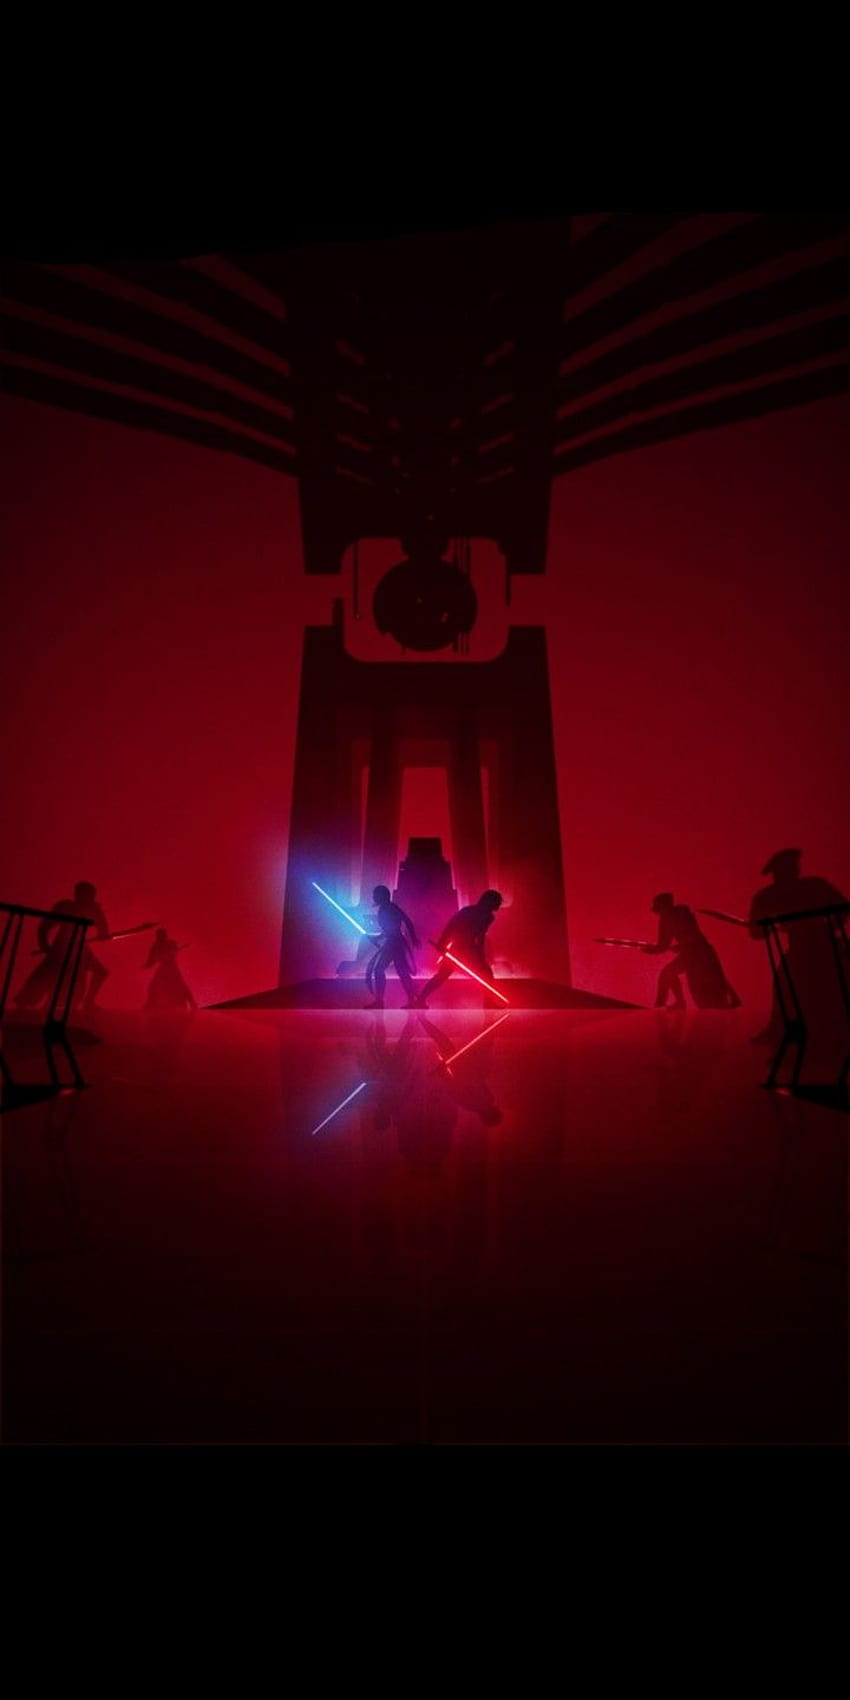 Star Wars TLJ Throne Room Lightsaber Duel por Marco Manev. 18:9 ., luta com sabre de luz Papel de parede de celular HD